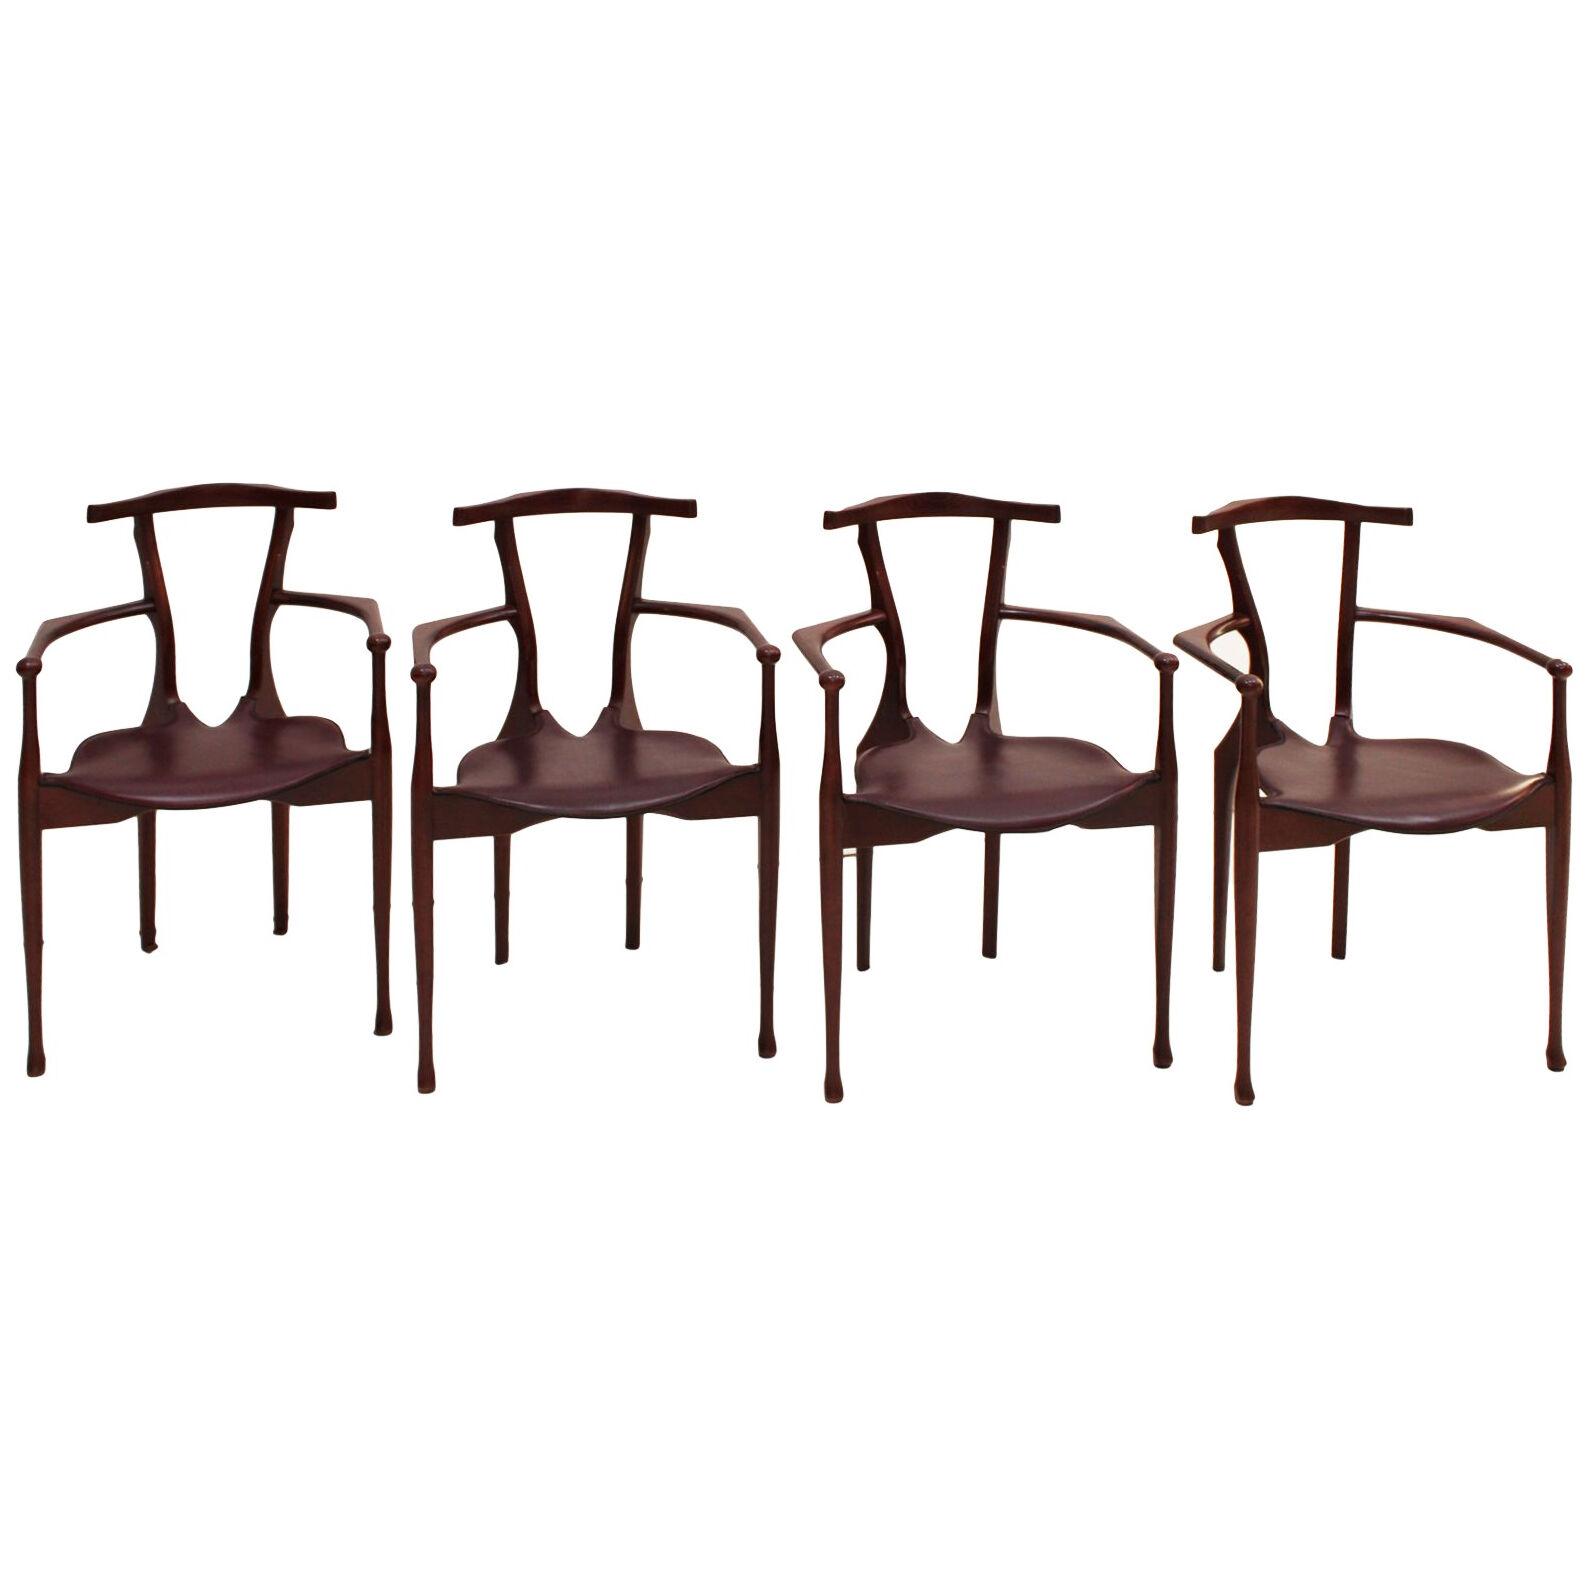 Oscar Tusquets Mid-Century Modern Wood and Leather "Gaulino" Spanish Set Chairs